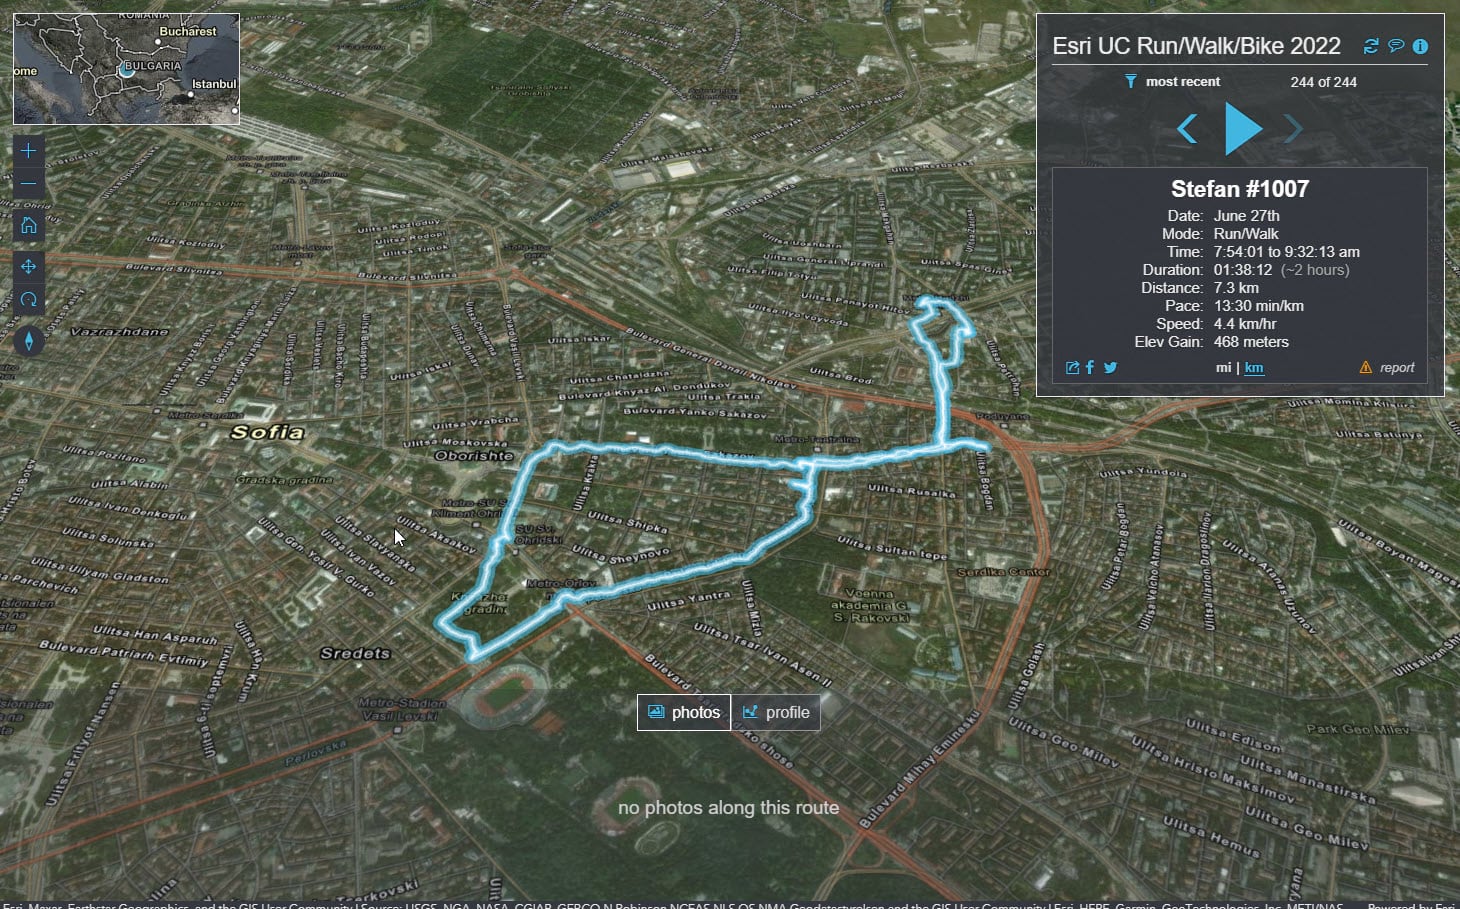 Esri UC Run/Walk/Bike 2022 event route in Bulgaria shown on 3D app